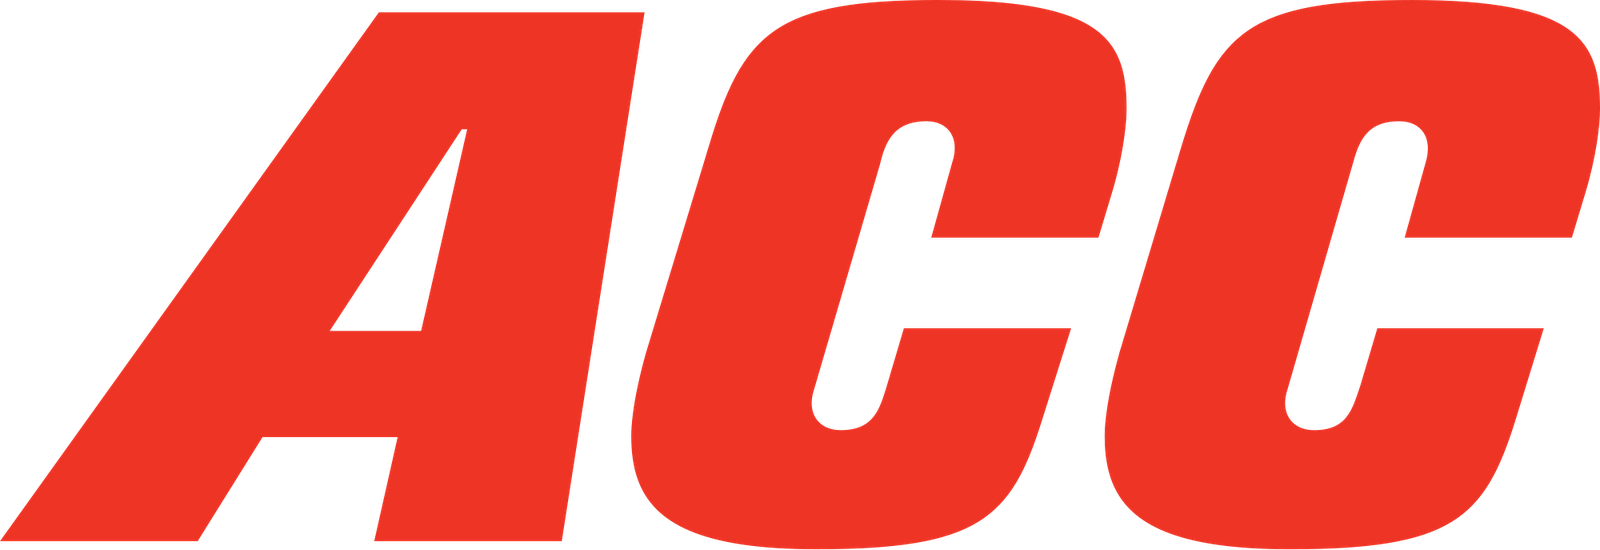 ACC Logo - ACC Cement Logo | Free Indian Logos